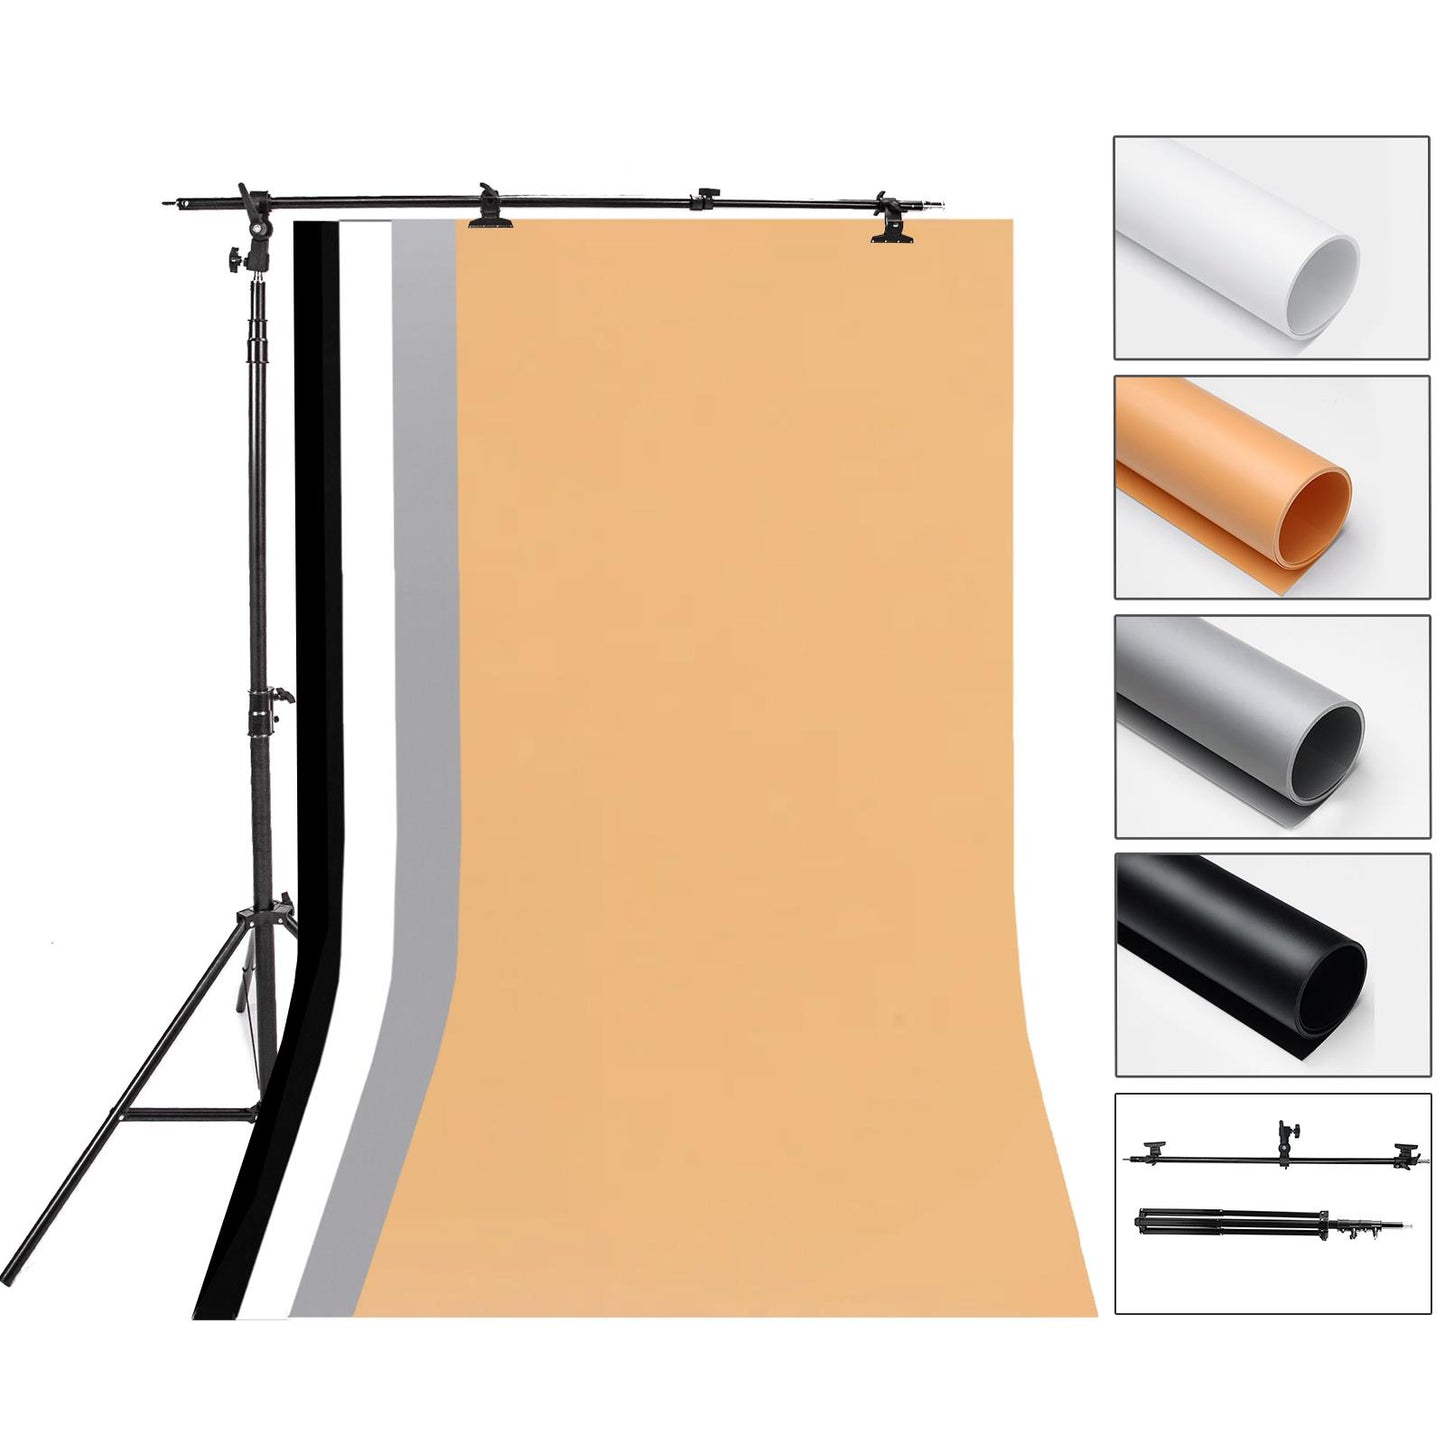 Black + White + Peach + Grey PVC Backdrops, 1.2m x 2m, with Mounting Frame